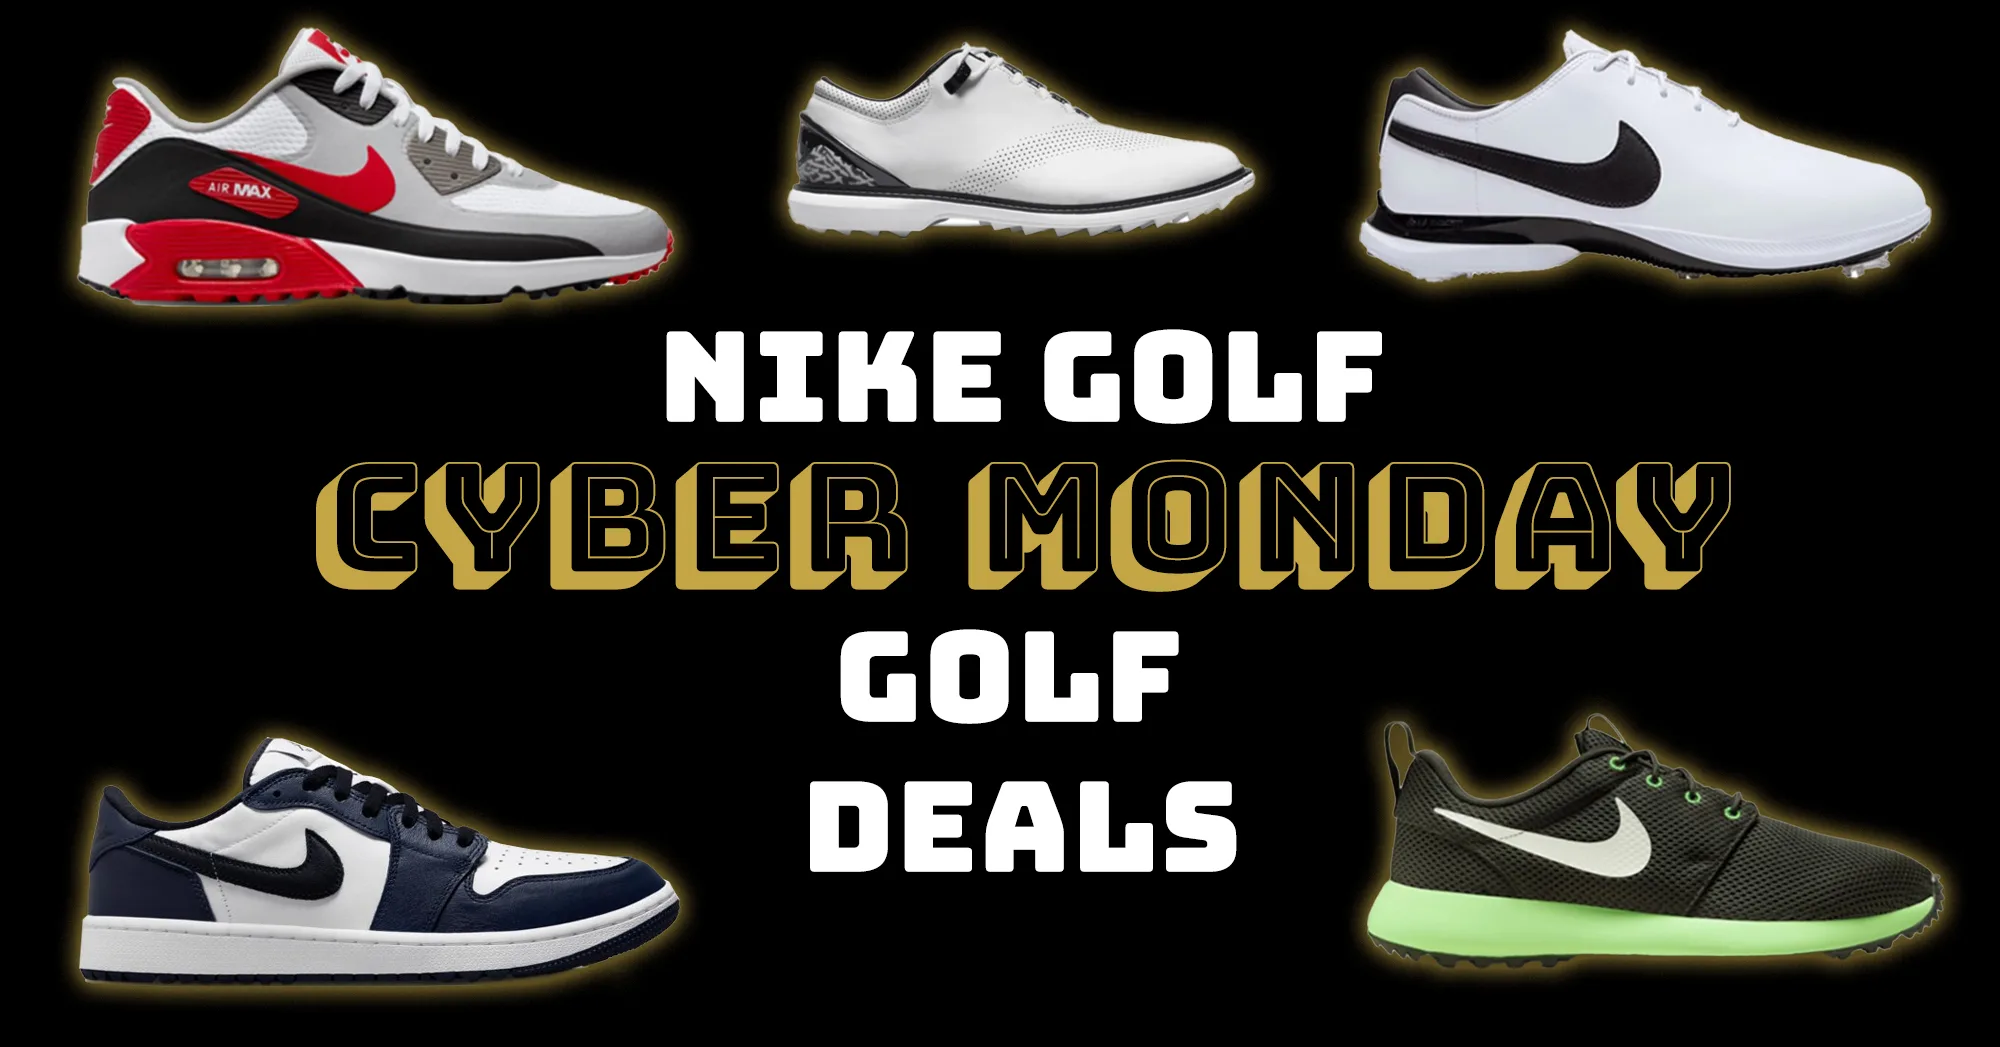 Cyber Monday Golf Deals - Nike Golf Shoes